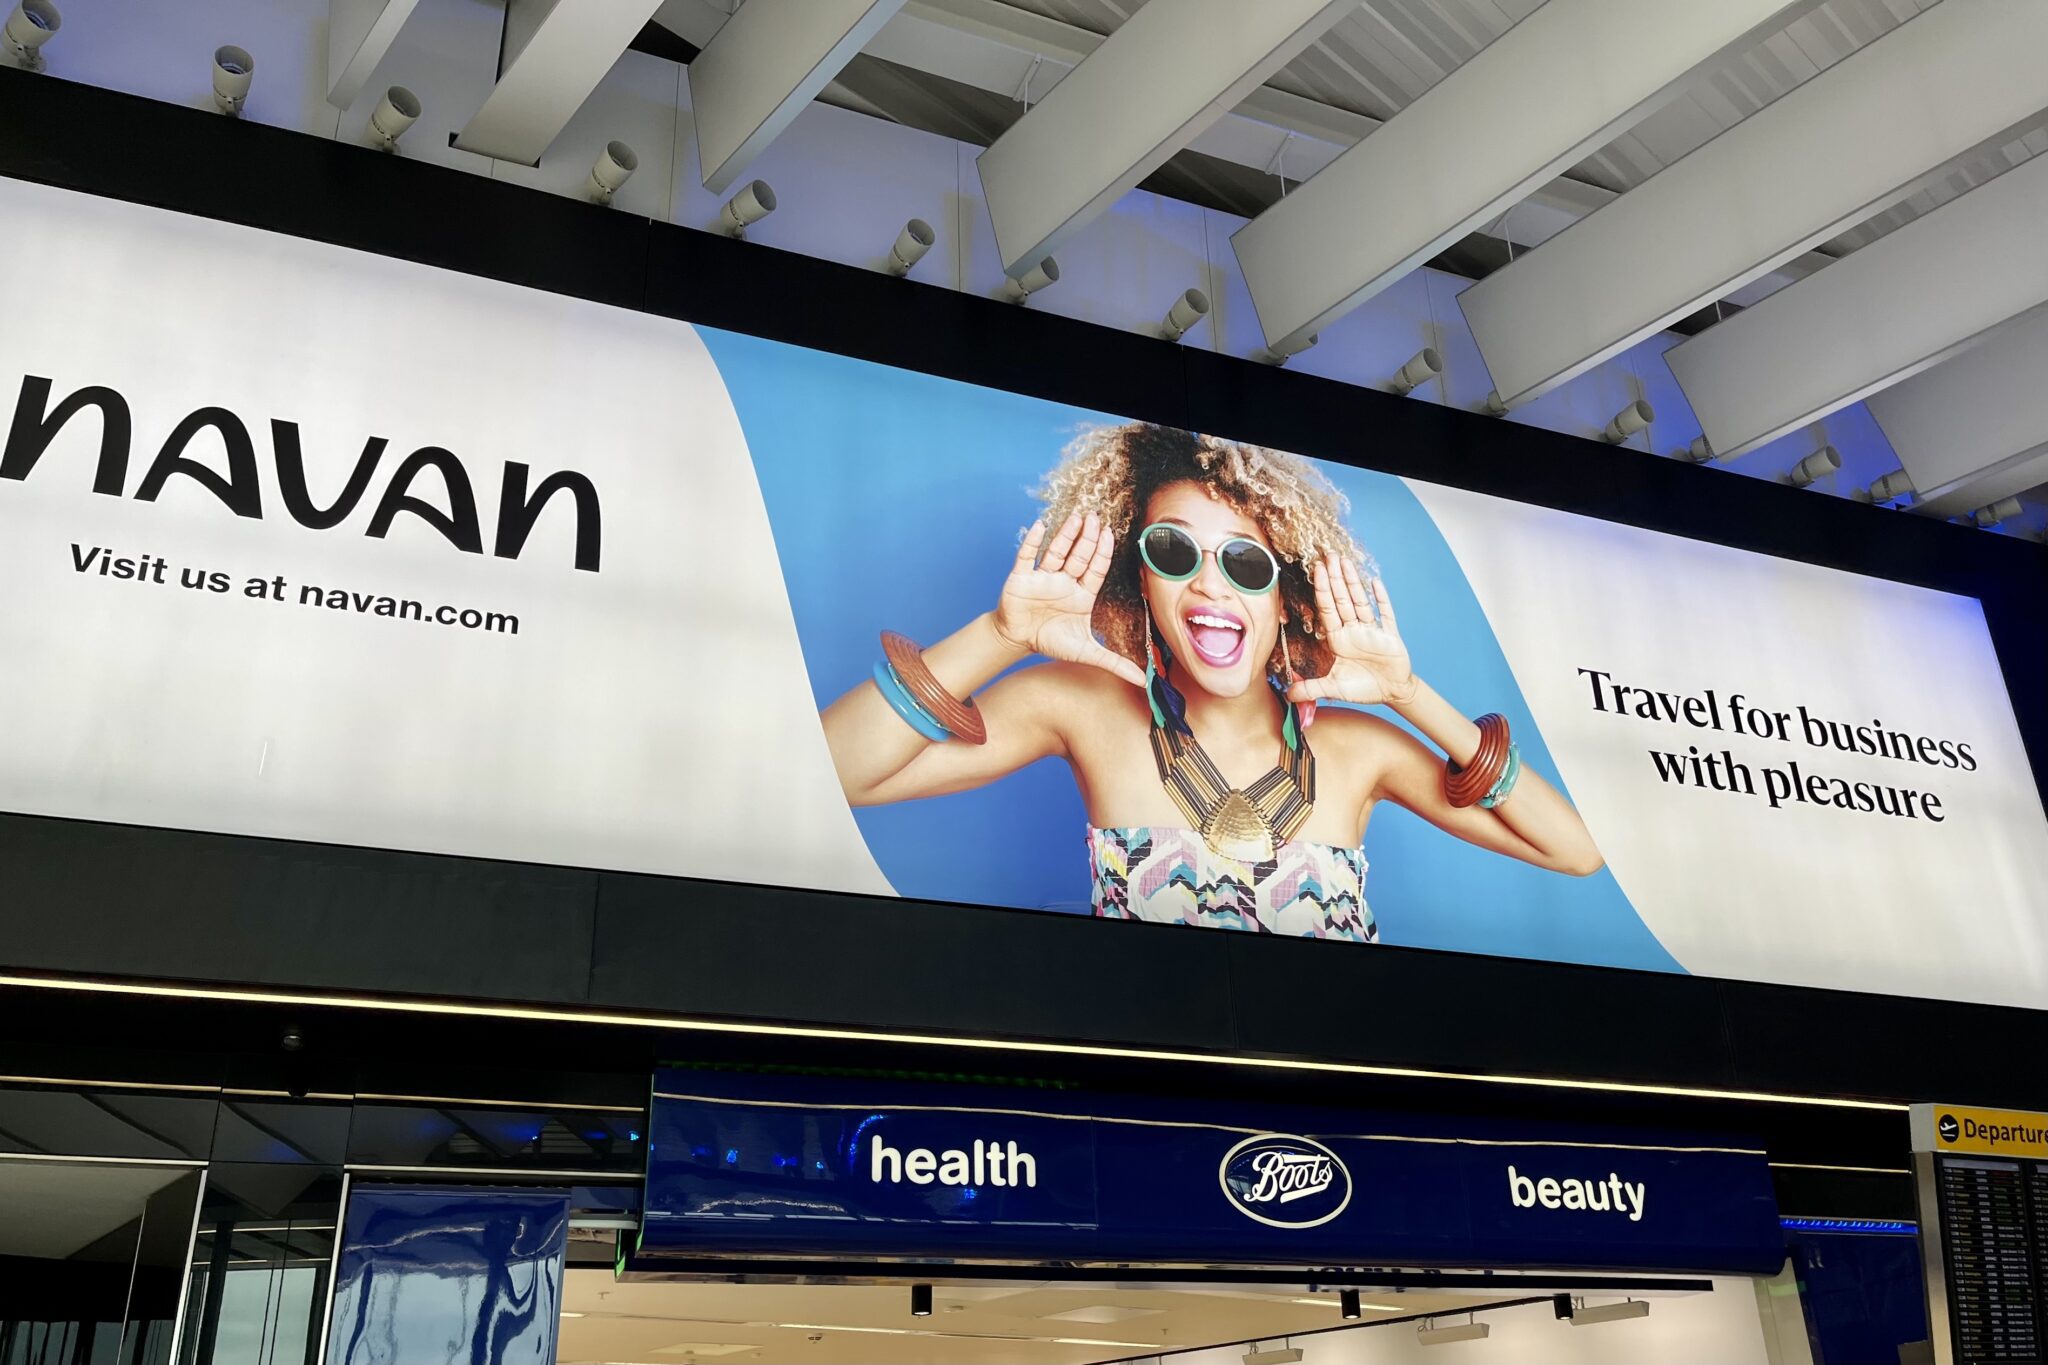 A Navan advertisement at Heathrow Airport outside of London. Source: Skift